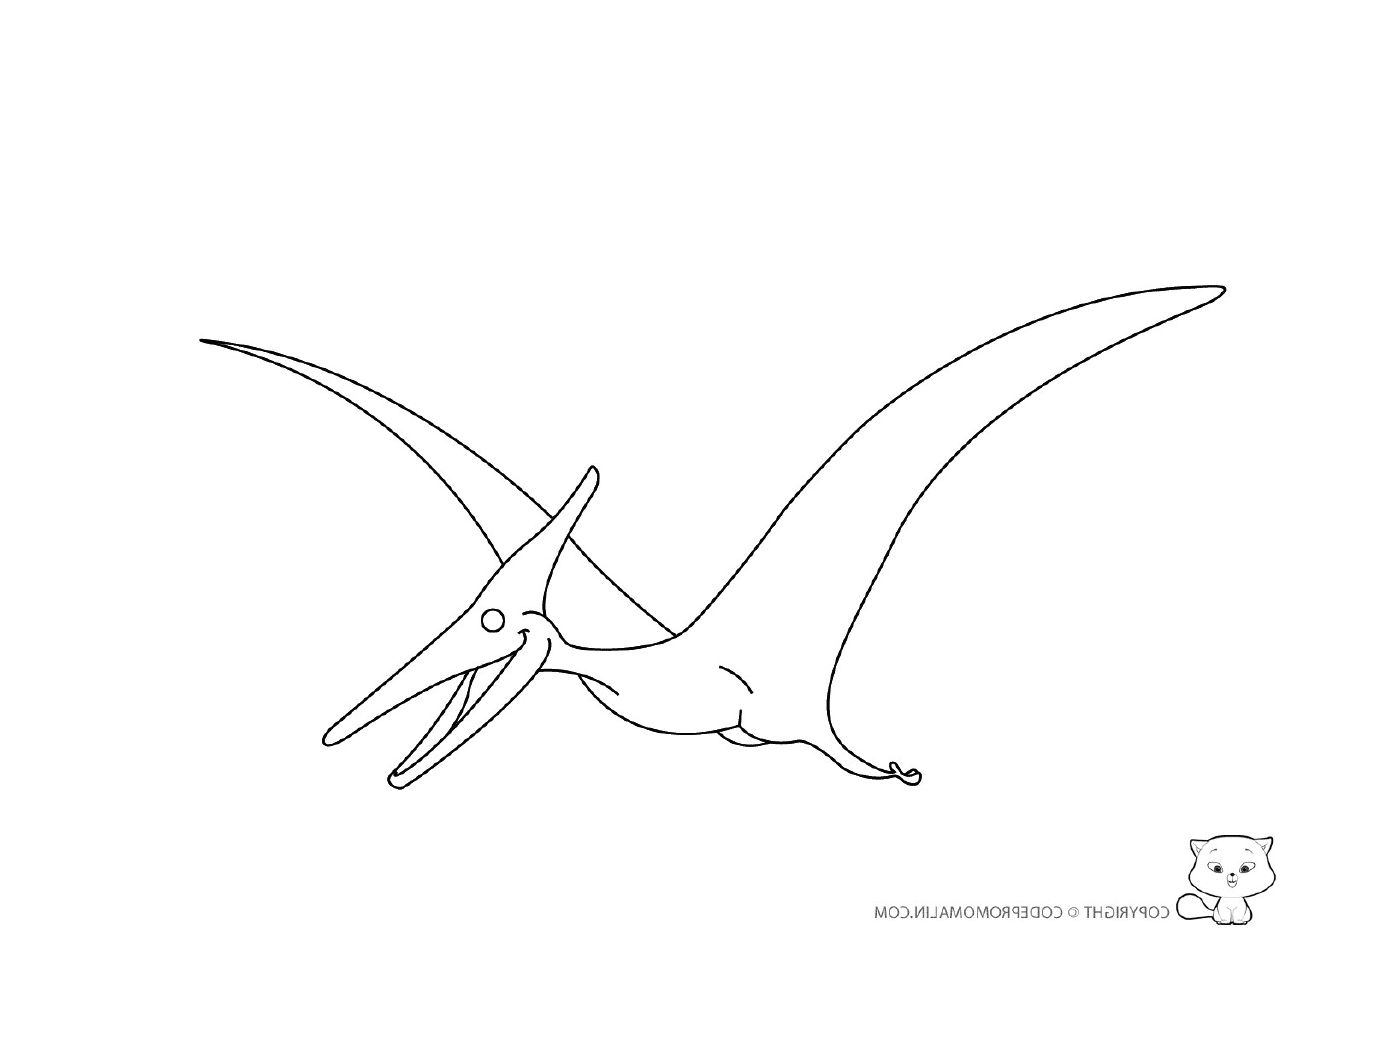  Pterodactylus en vuelo 